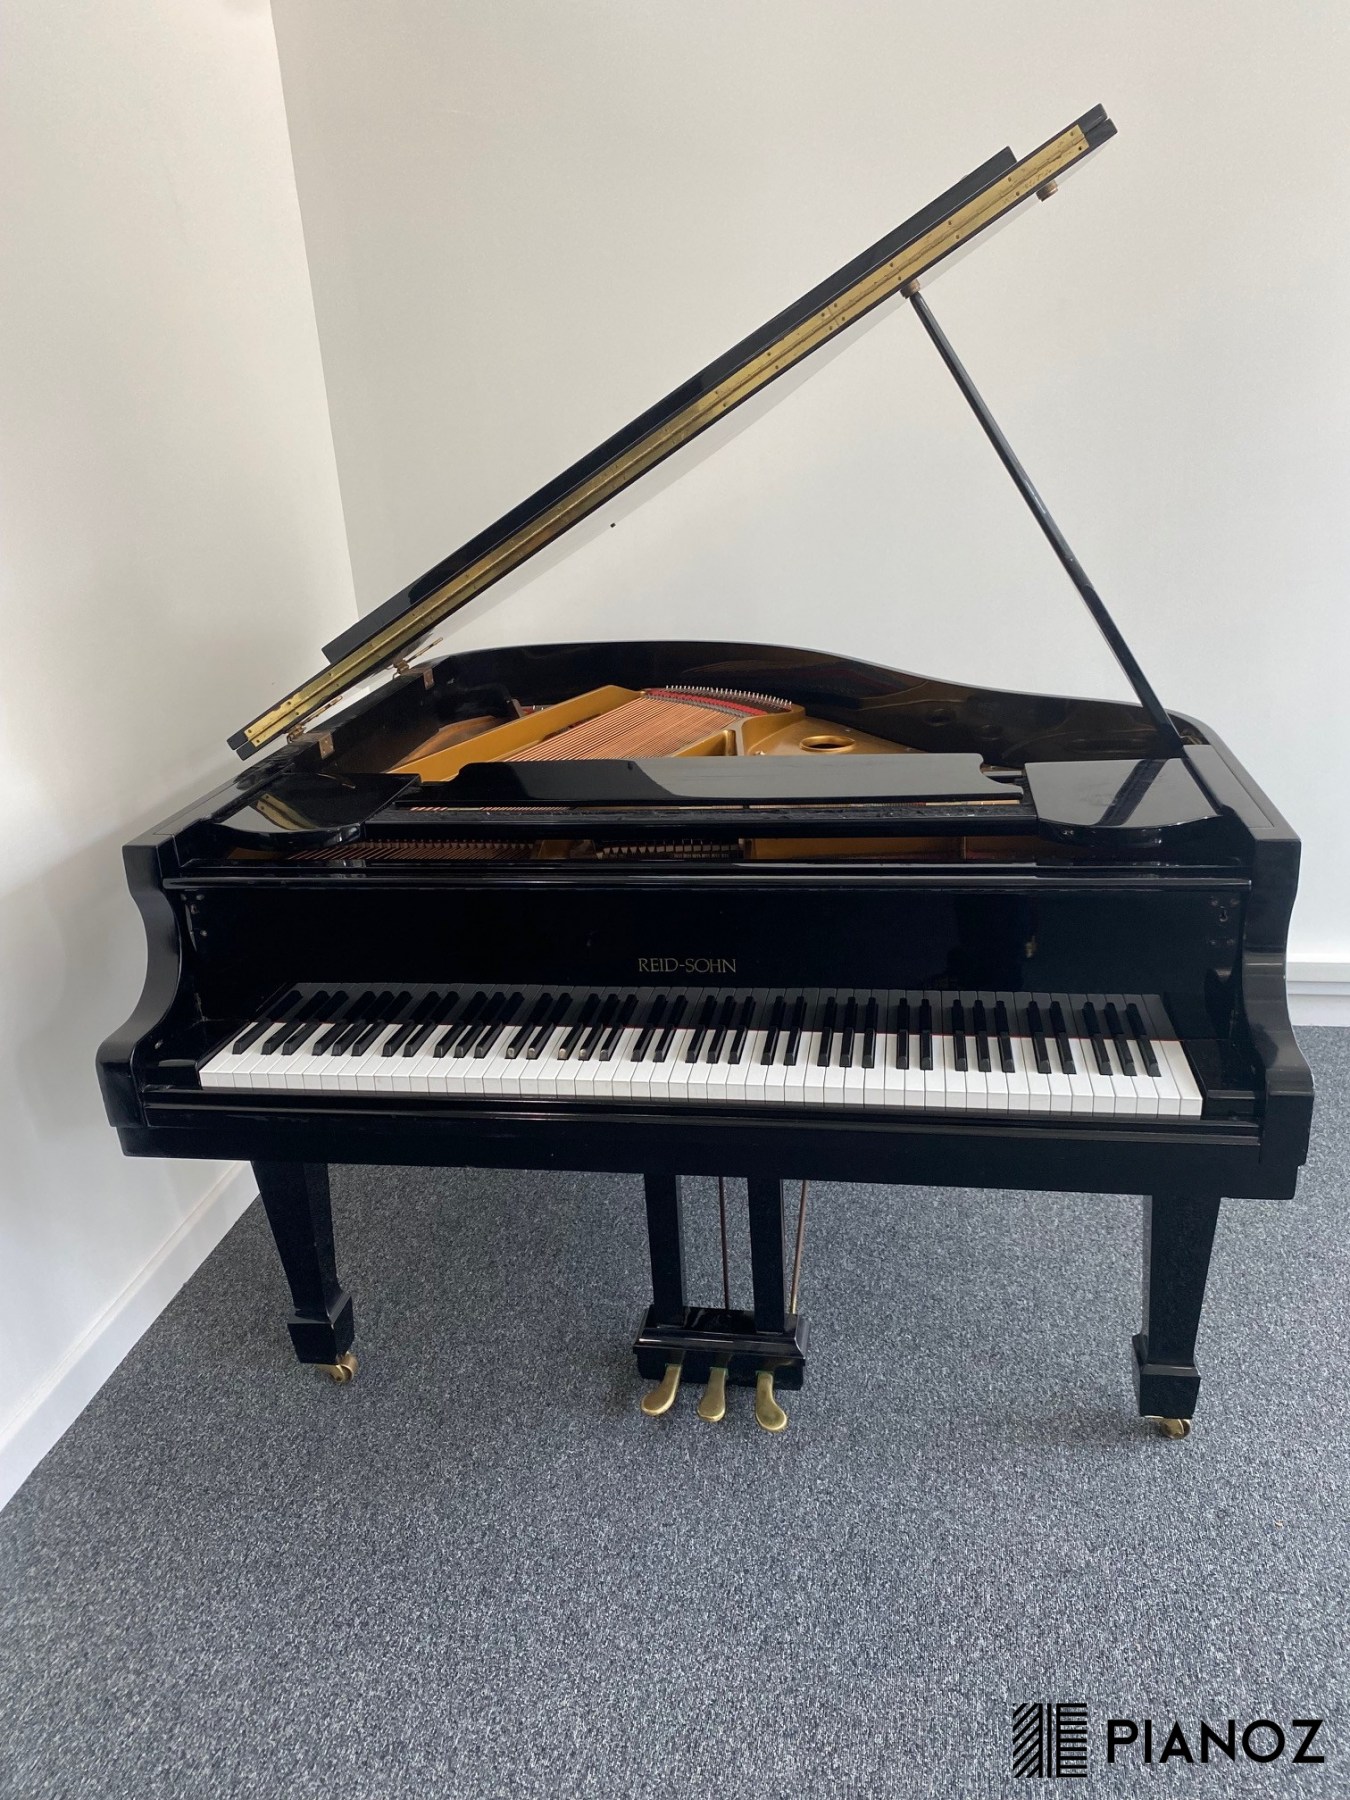 Reid Sohn 155 Black Gloss Baby Grand Piano piano for sale in UK